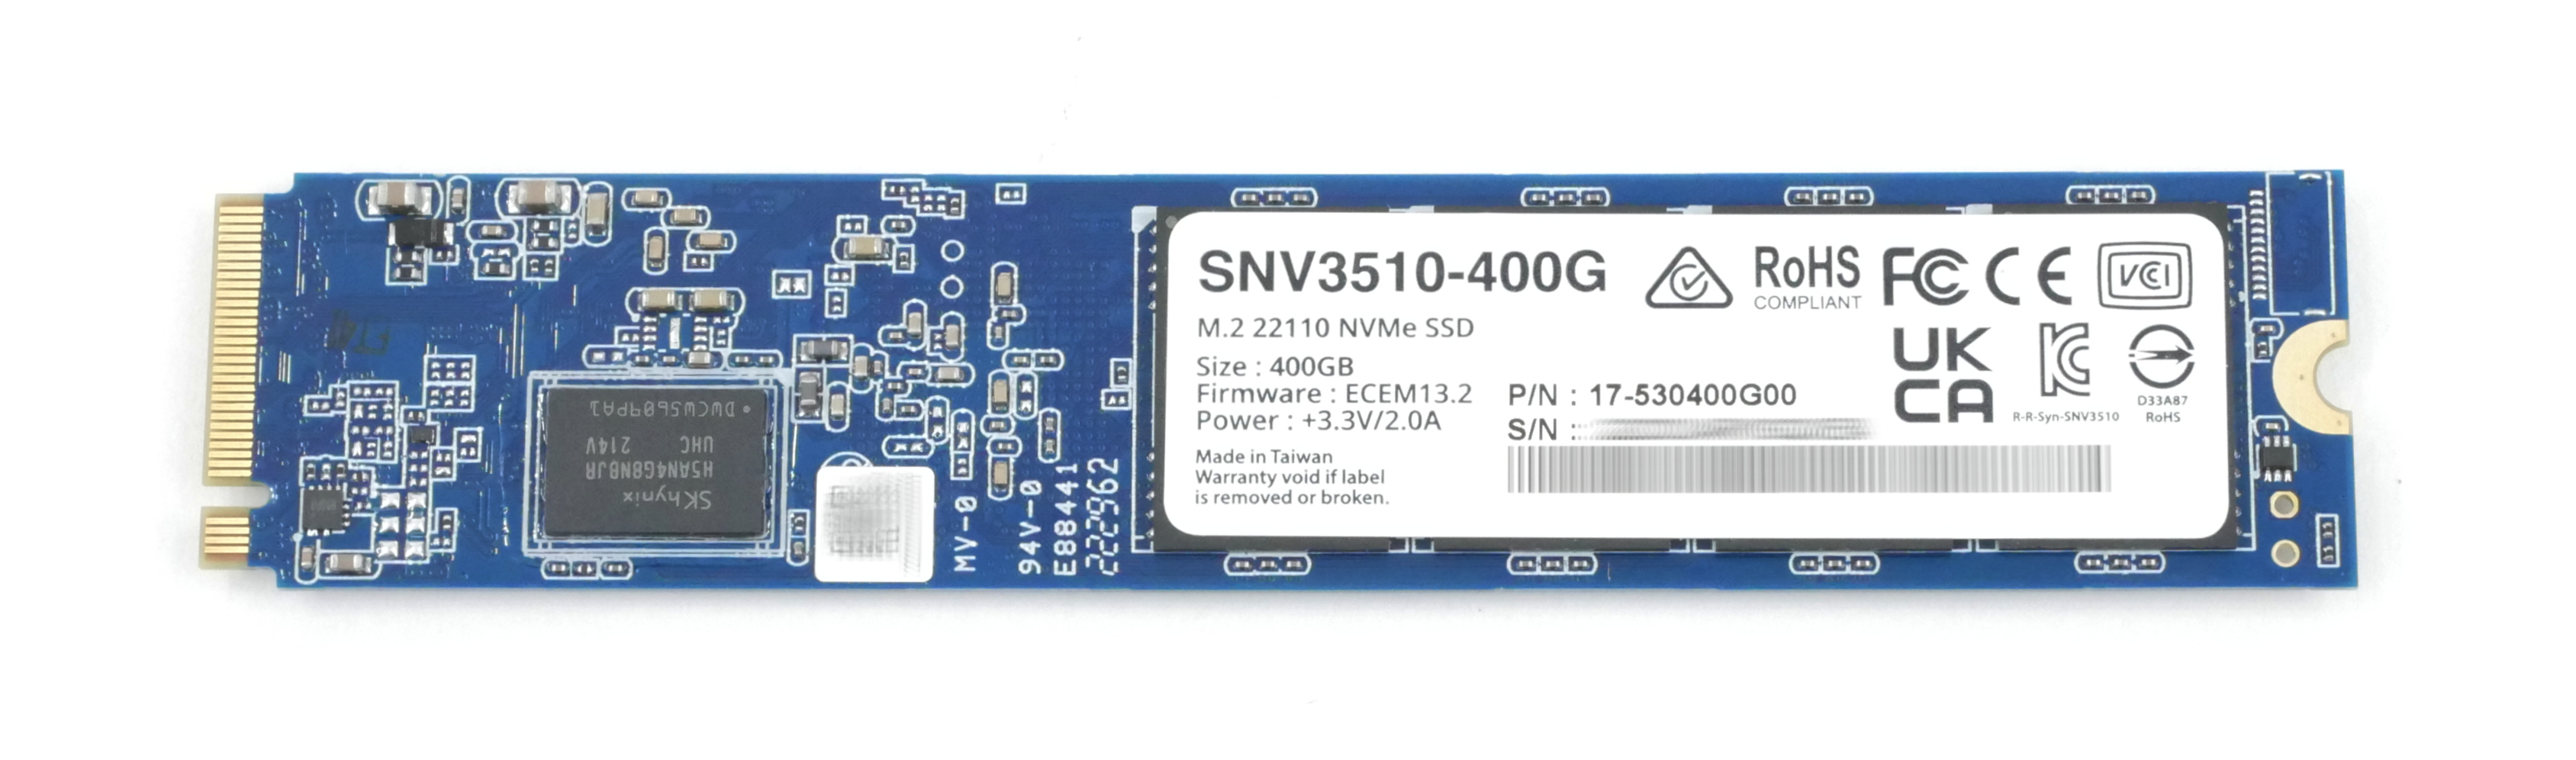 Synology Enterprise SNV3510-400G SSD 400GB NVMe M.2 22110 PCIe 3.0 x4 17-530400G00 - Click Image to Close